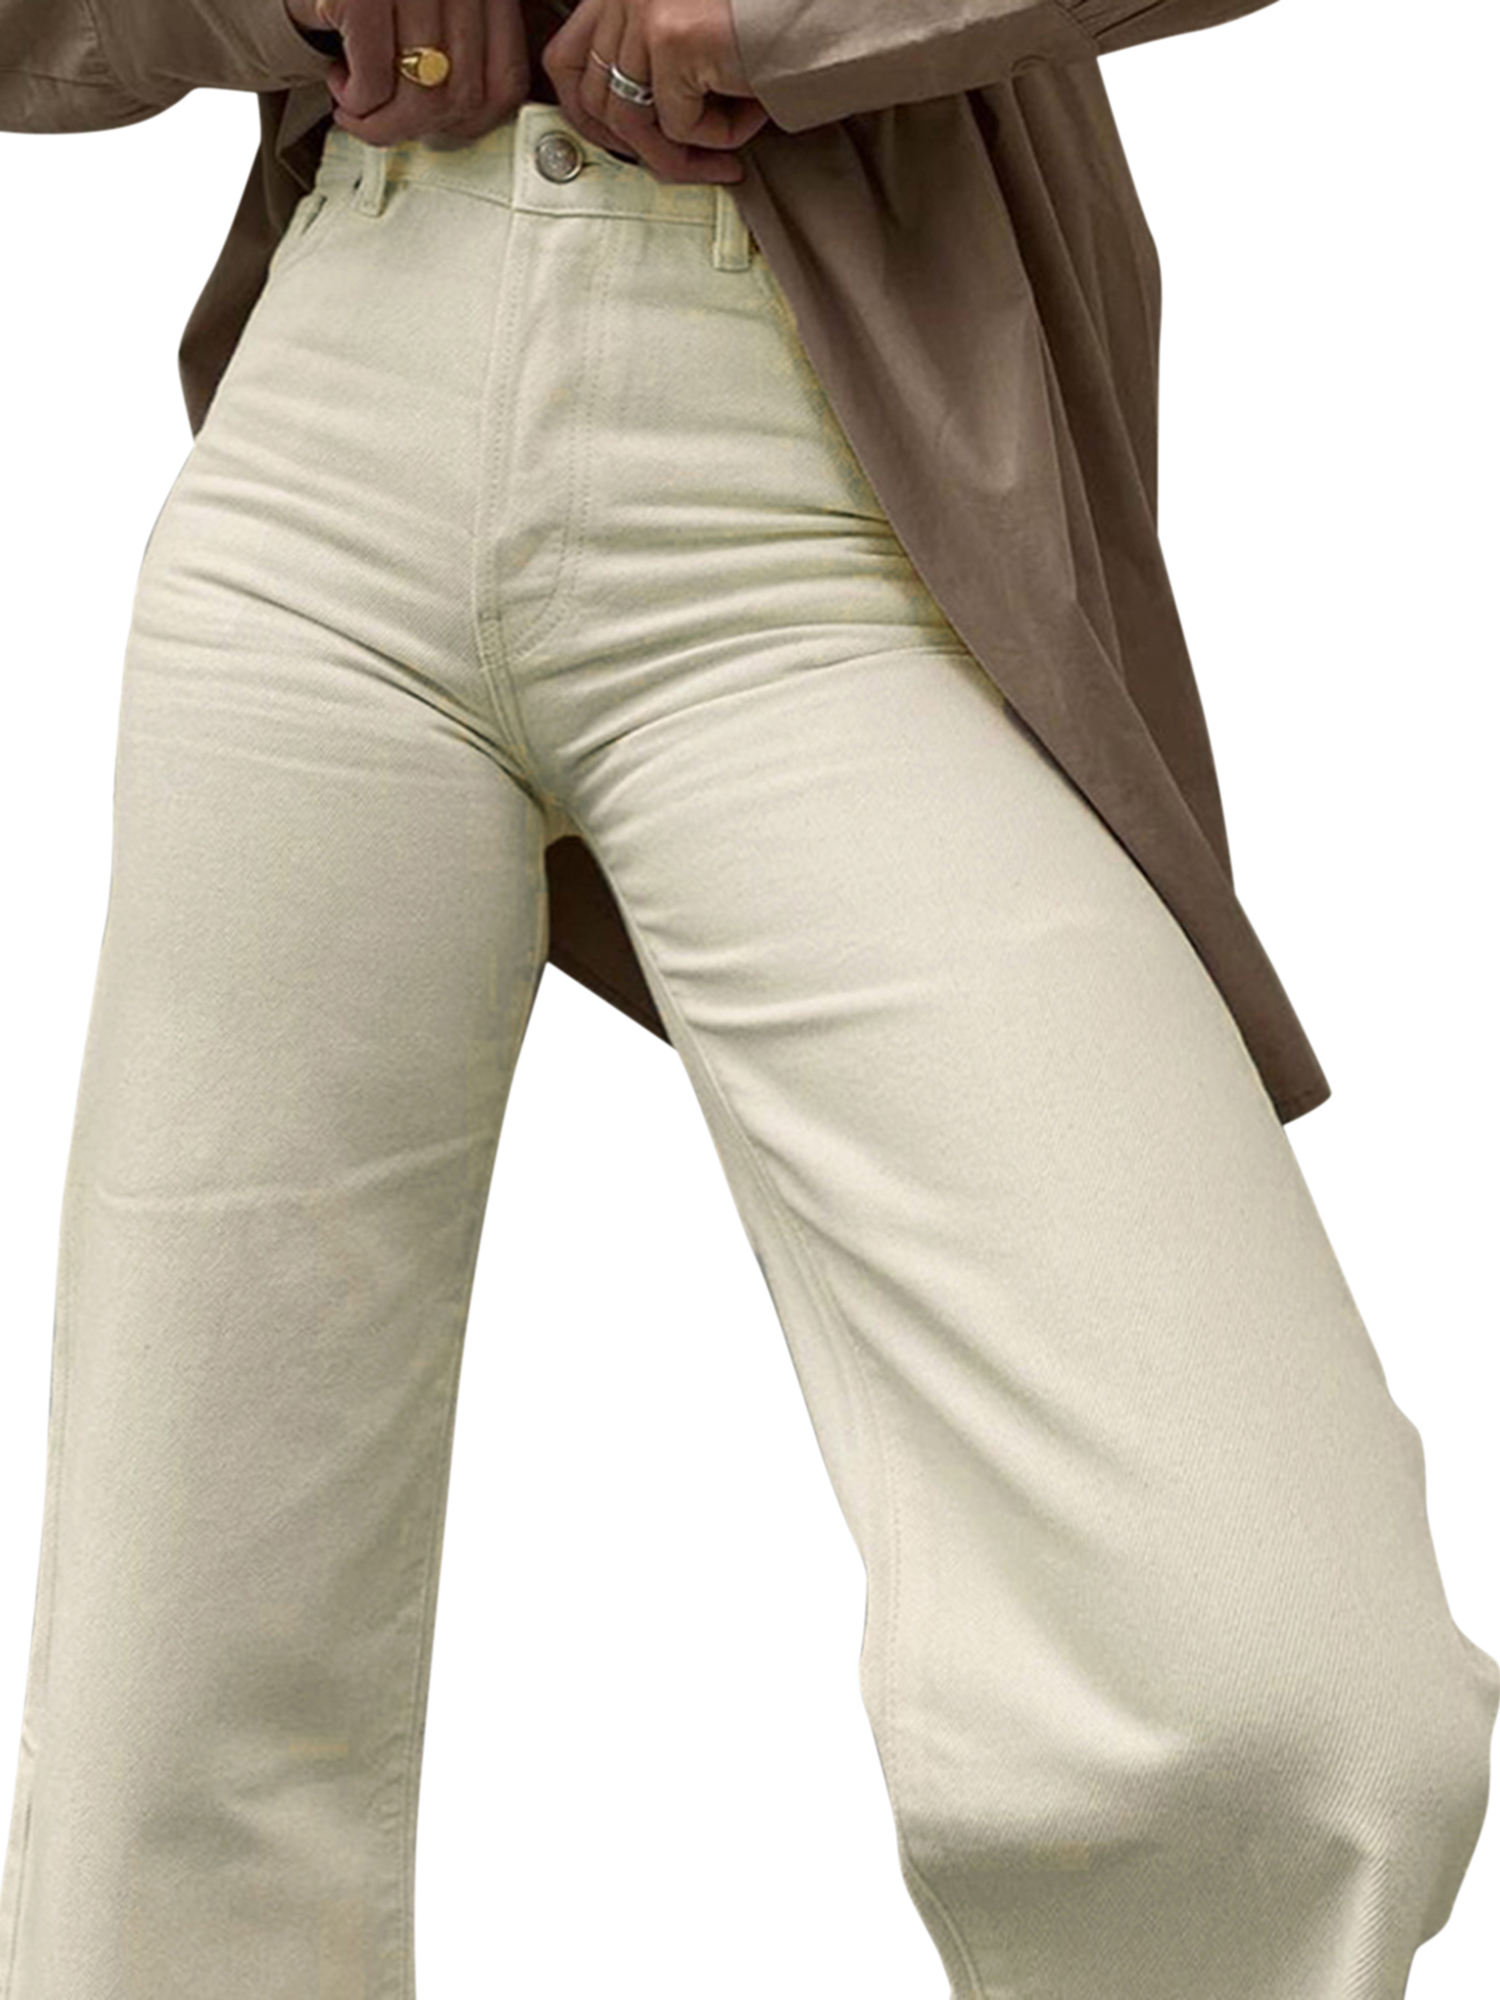 Seyurigaoka Female Solid Color High Waist Jeans Trousers Straight-Leg Pants - image 4 of 5